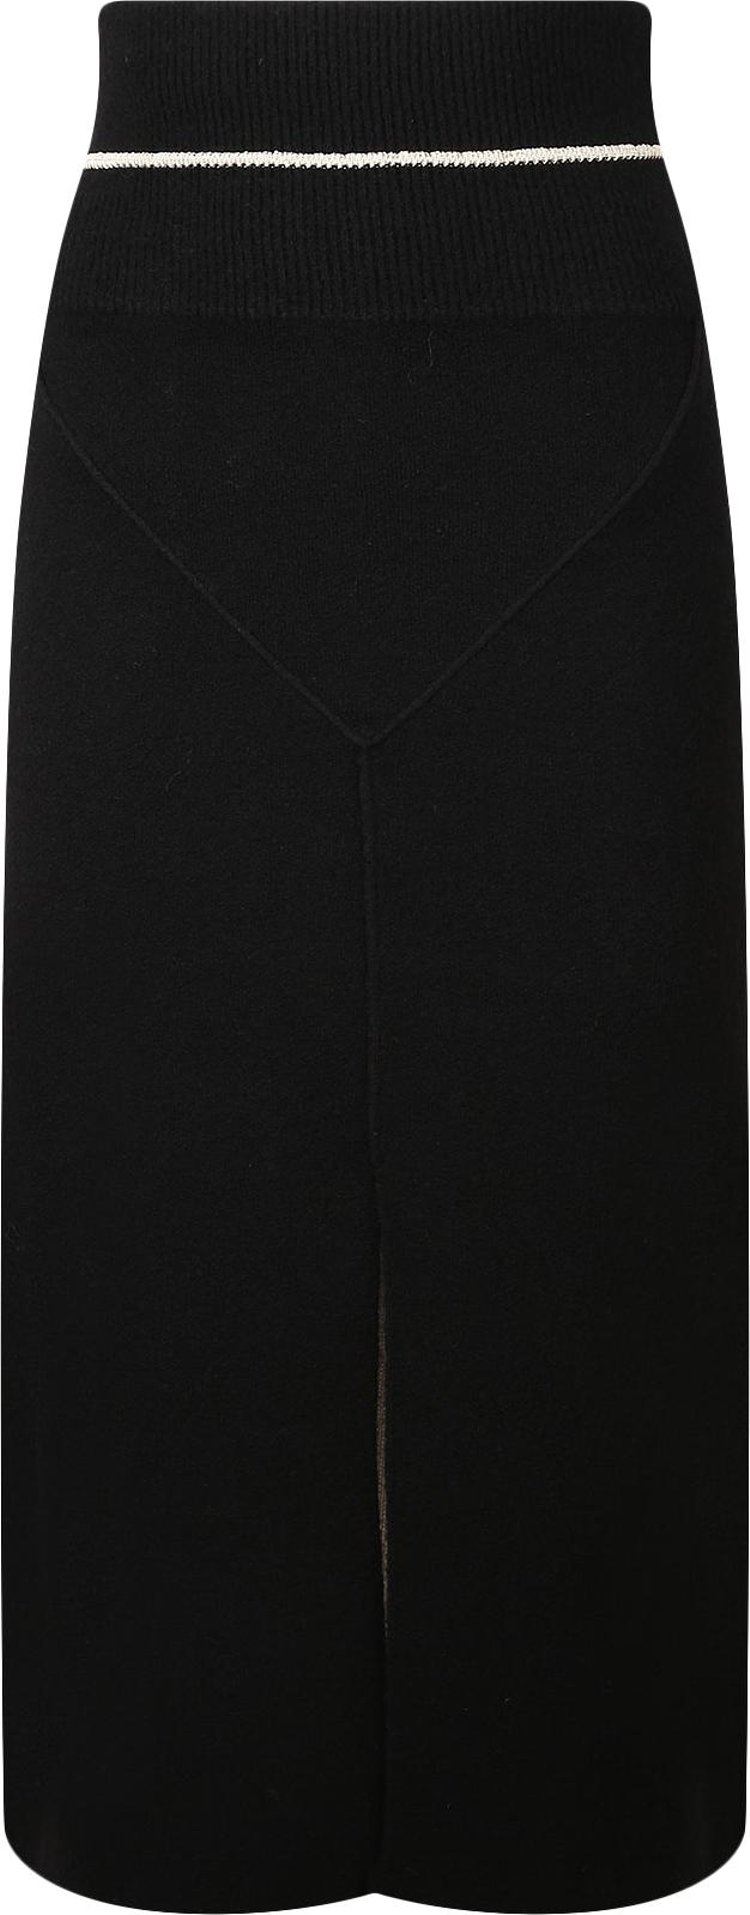 Moncler 1952 Knitwear Skirt 'Black'